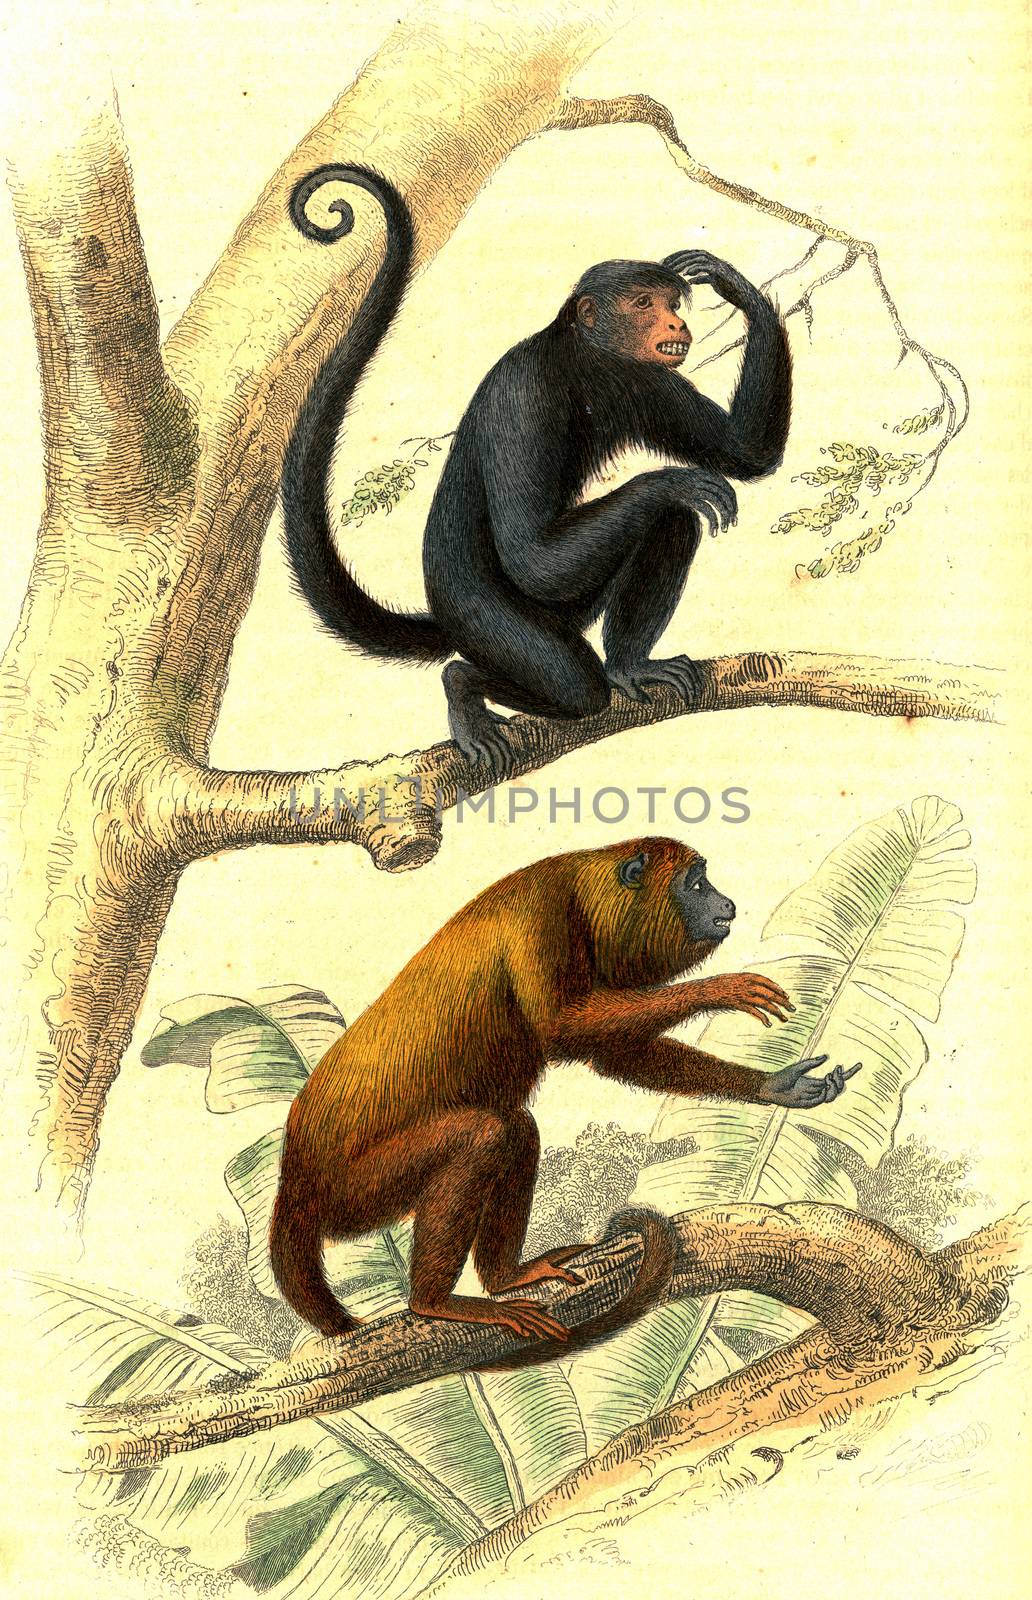 The Coaita, Howler monkeys, vintage engraved illustration. From Buffon Complete Work.
